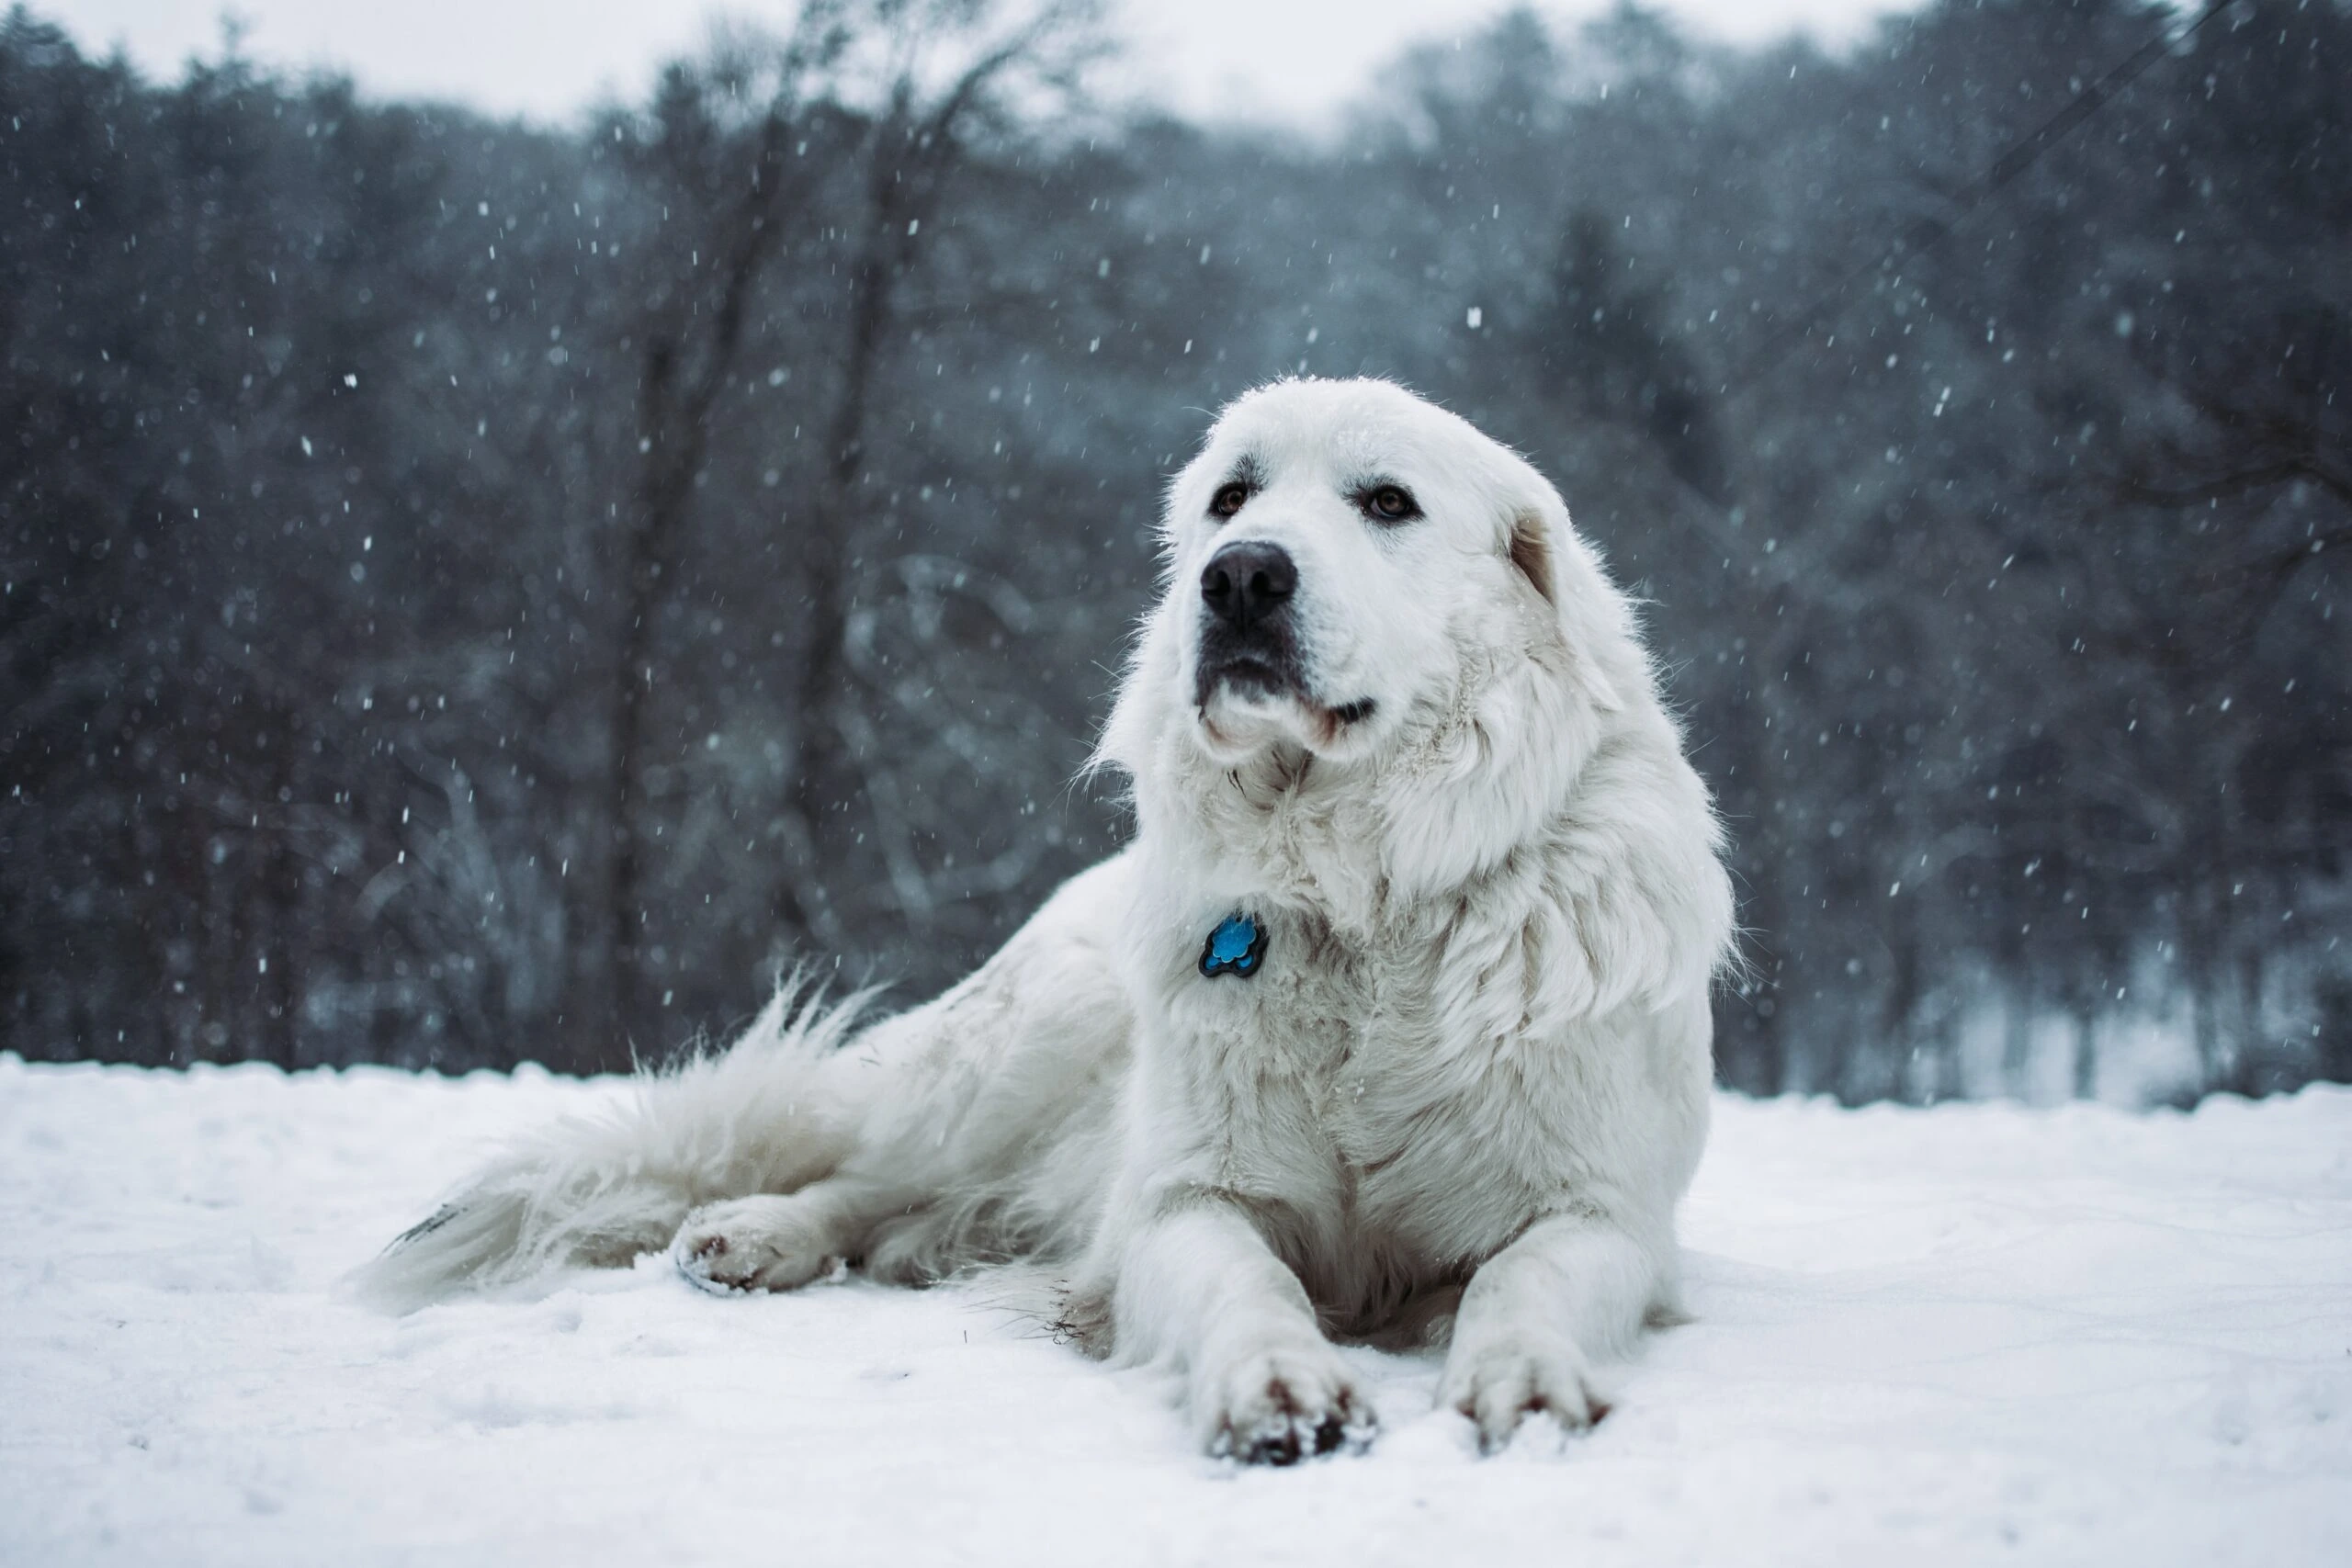 alex-ware-White dog on snowy slope-unsplash-scaled